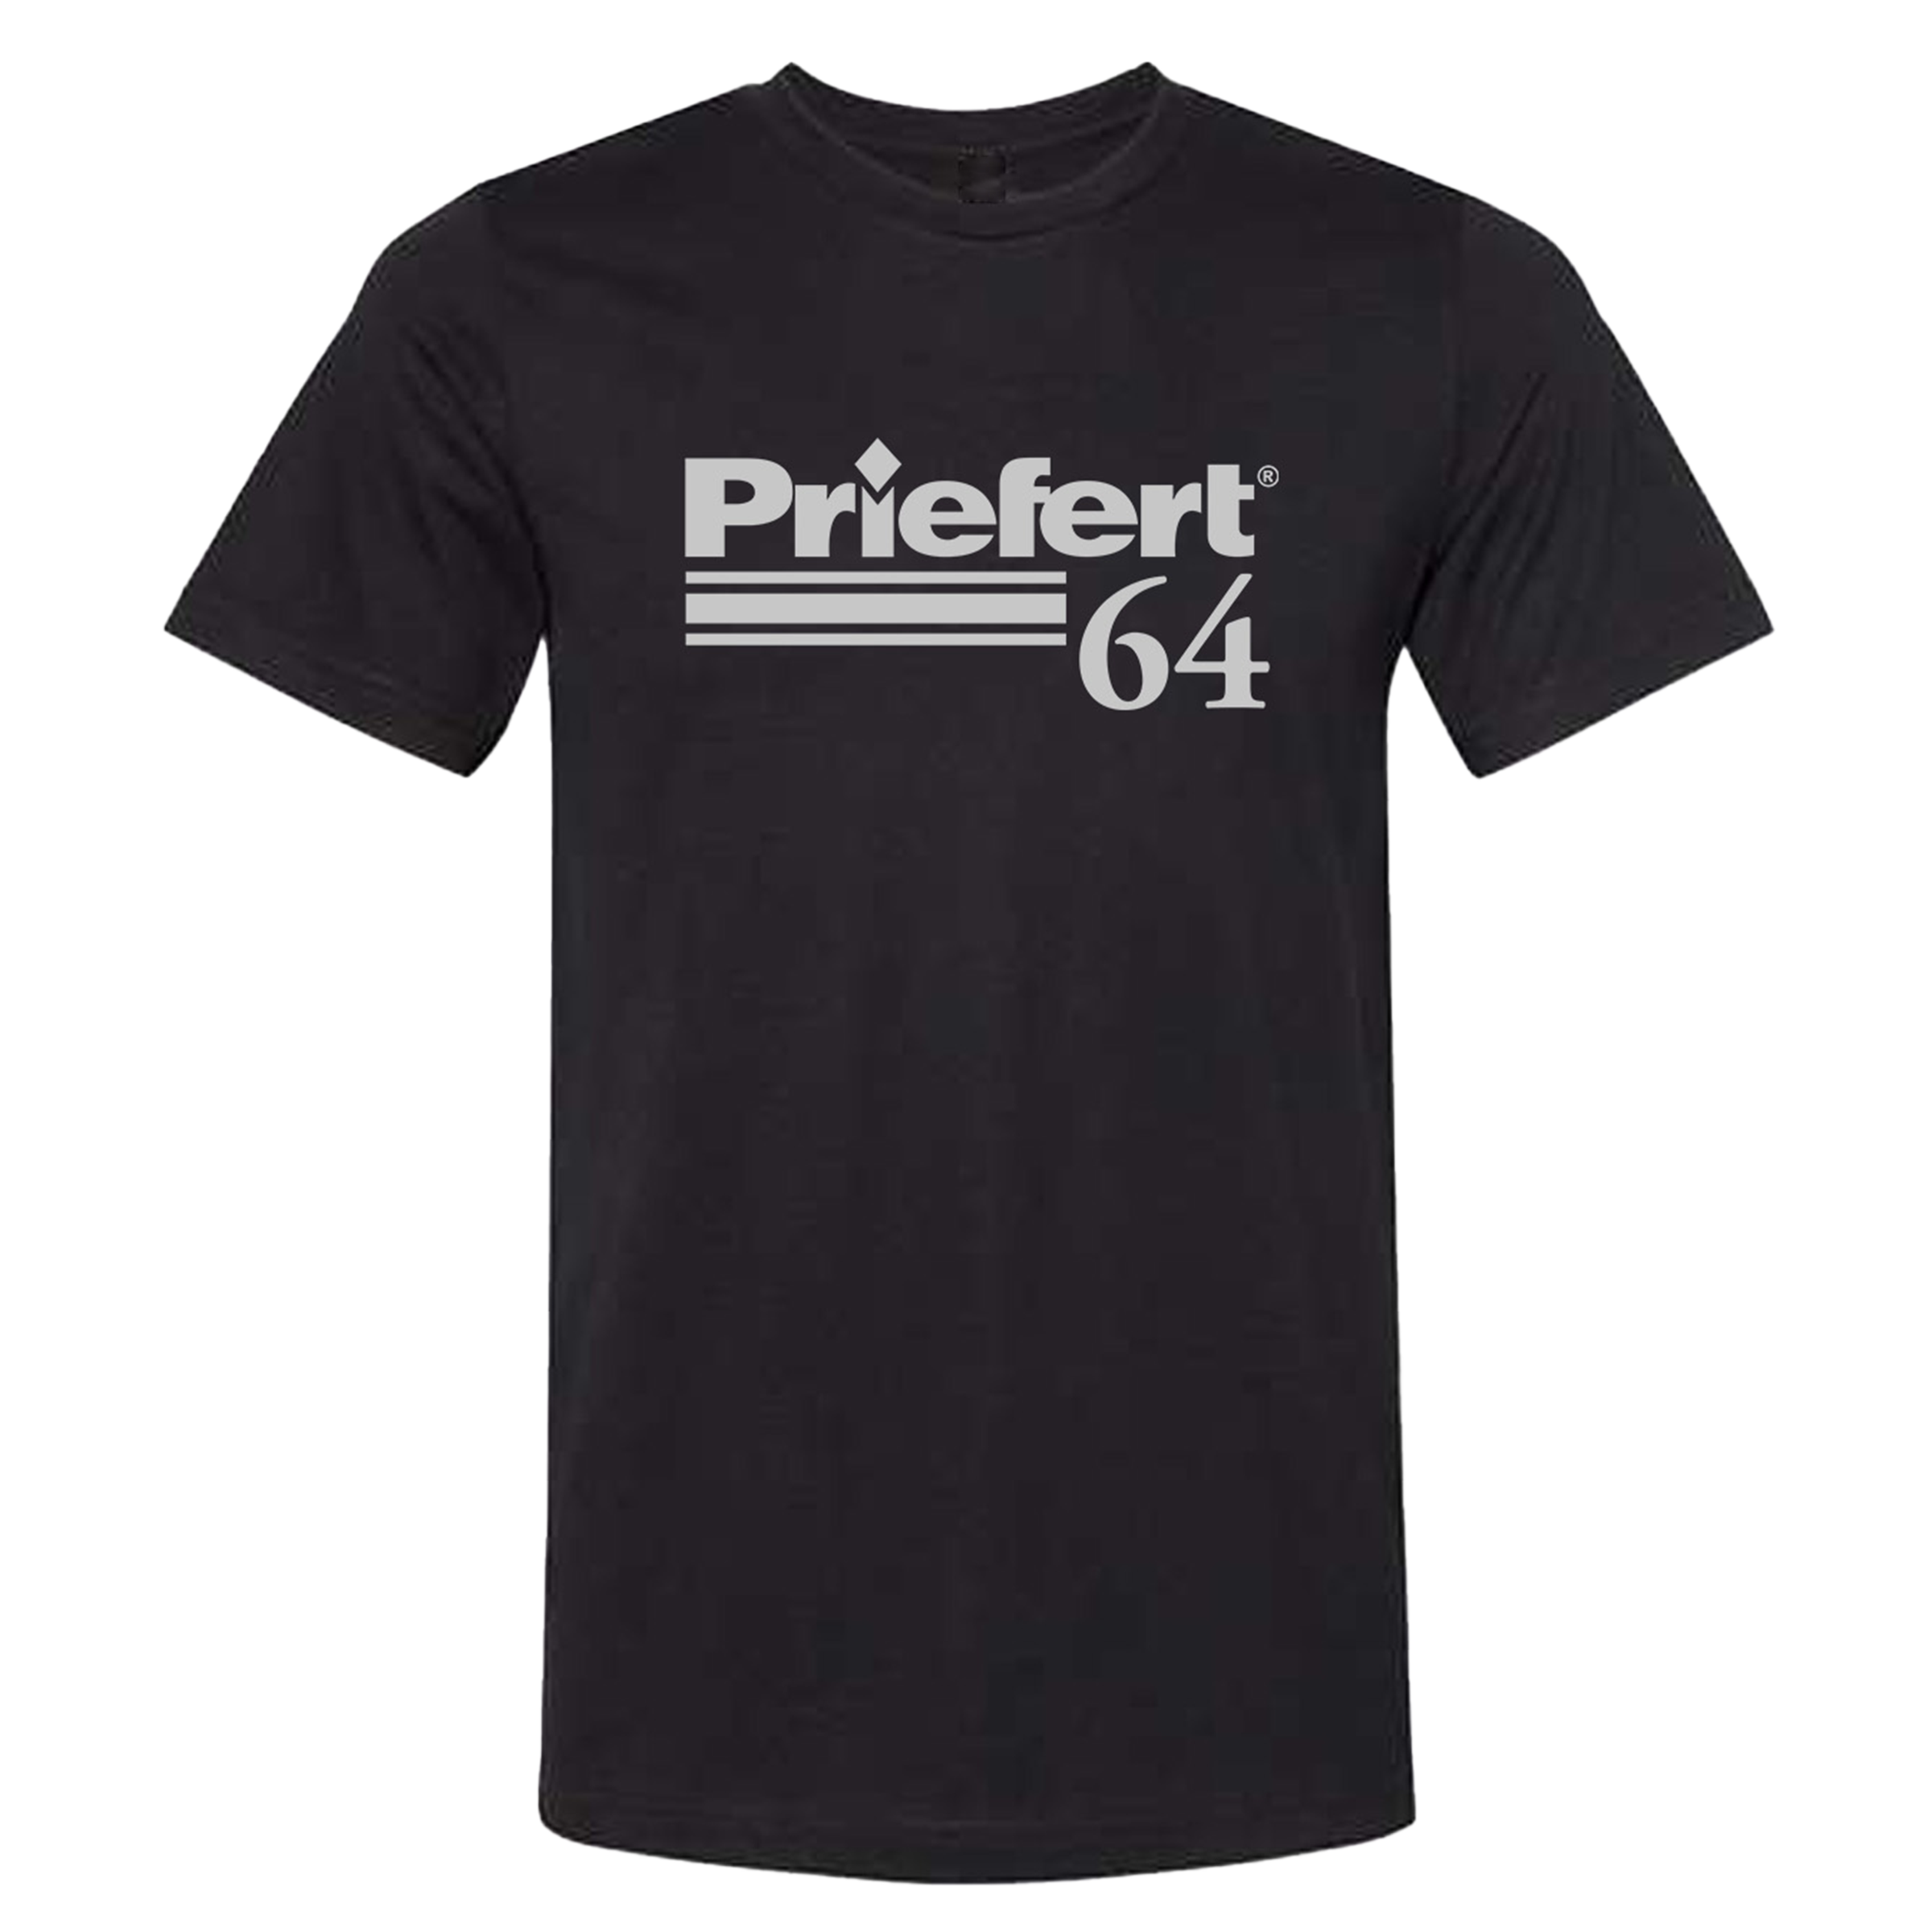 Black Priefert '64 T-Shirt